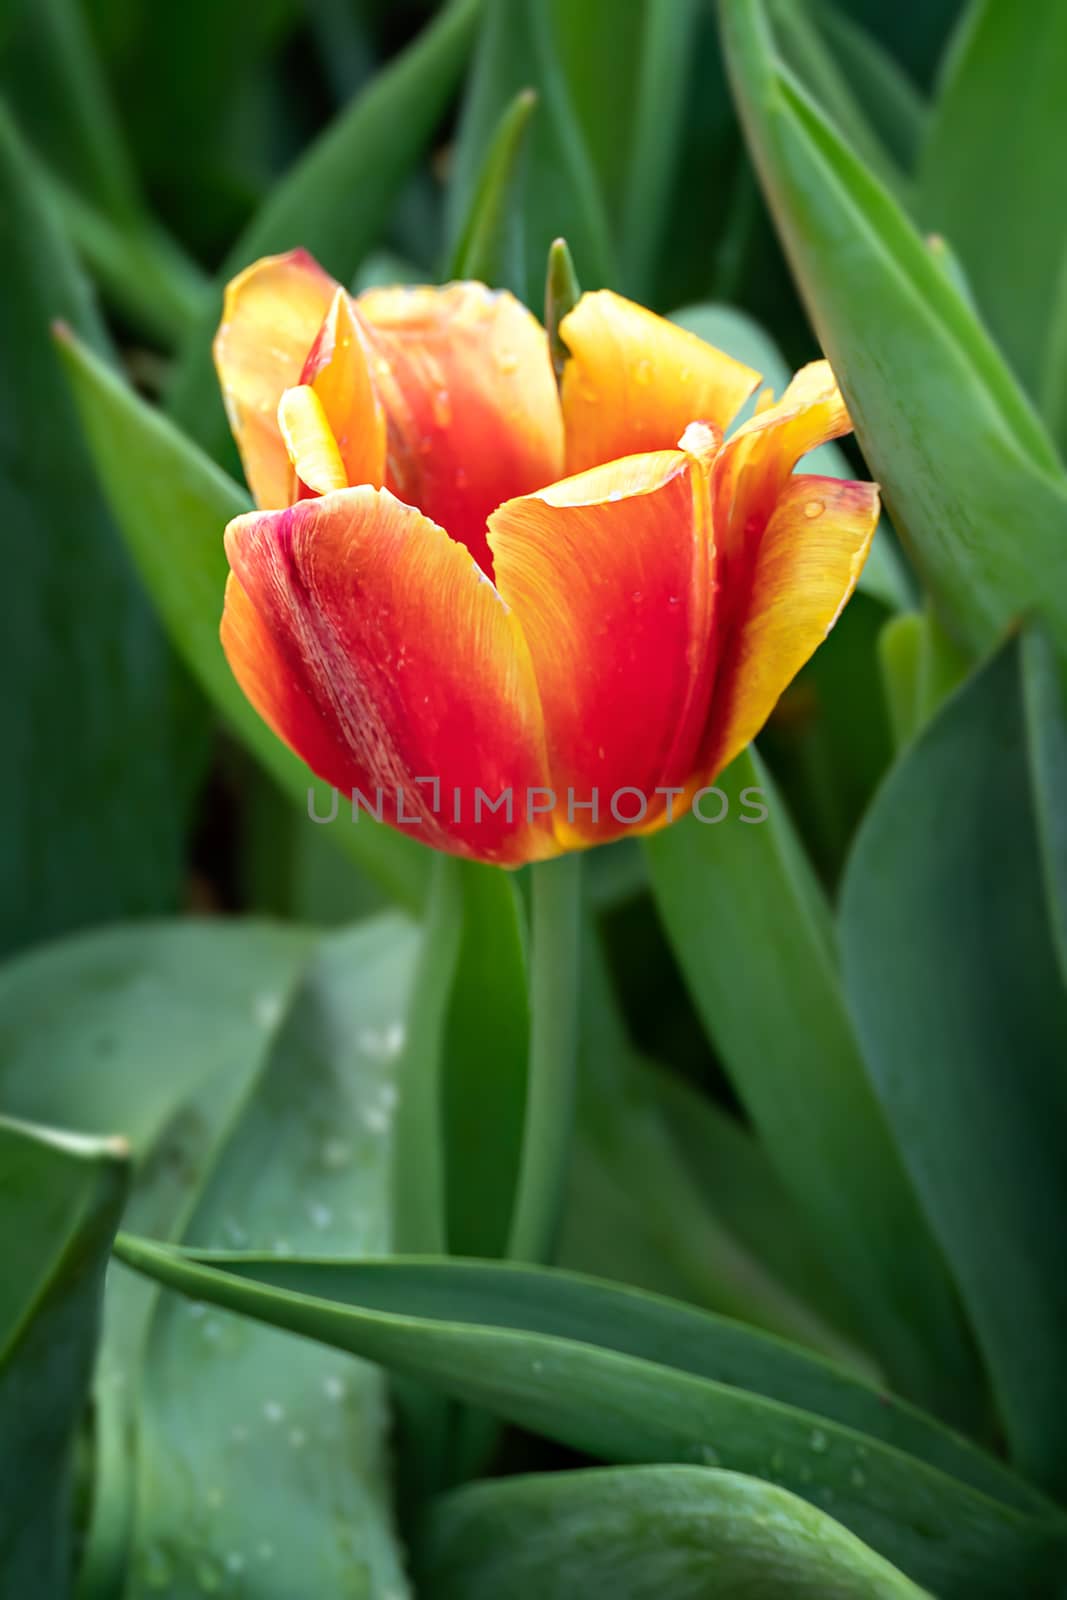 Beautiful orange tulips flower with green leaves grown in garden